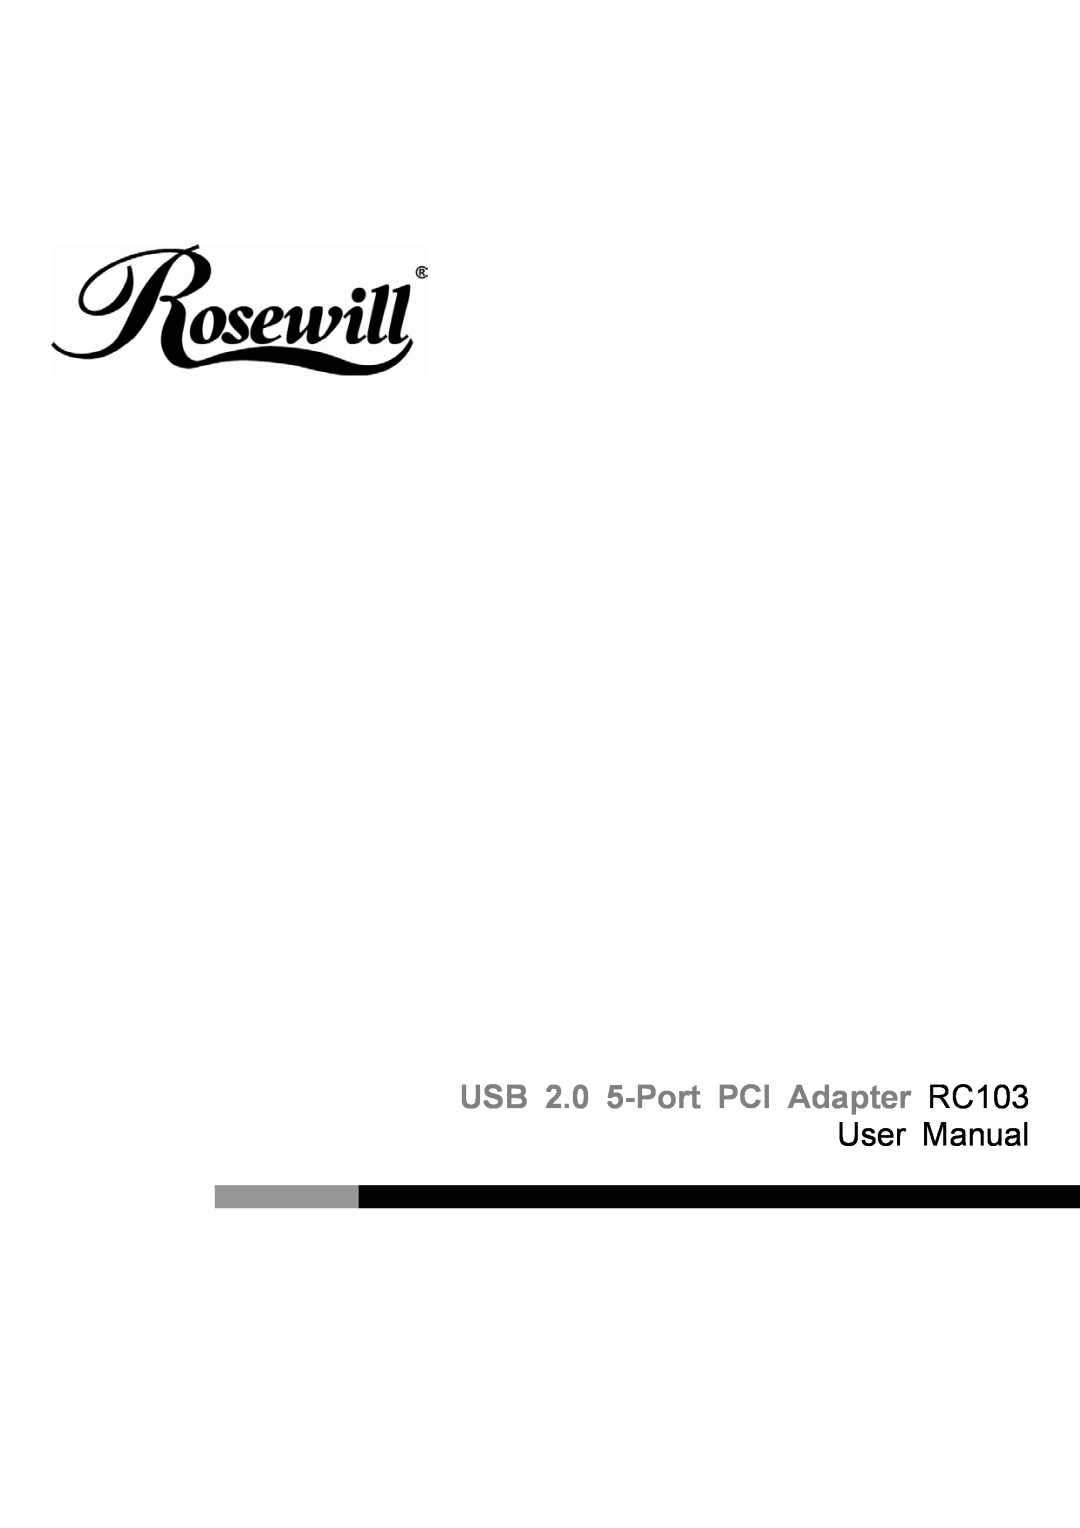 Rosewill user manual USB 2.0 5-Port PCI Adapter RC103, User Manual 